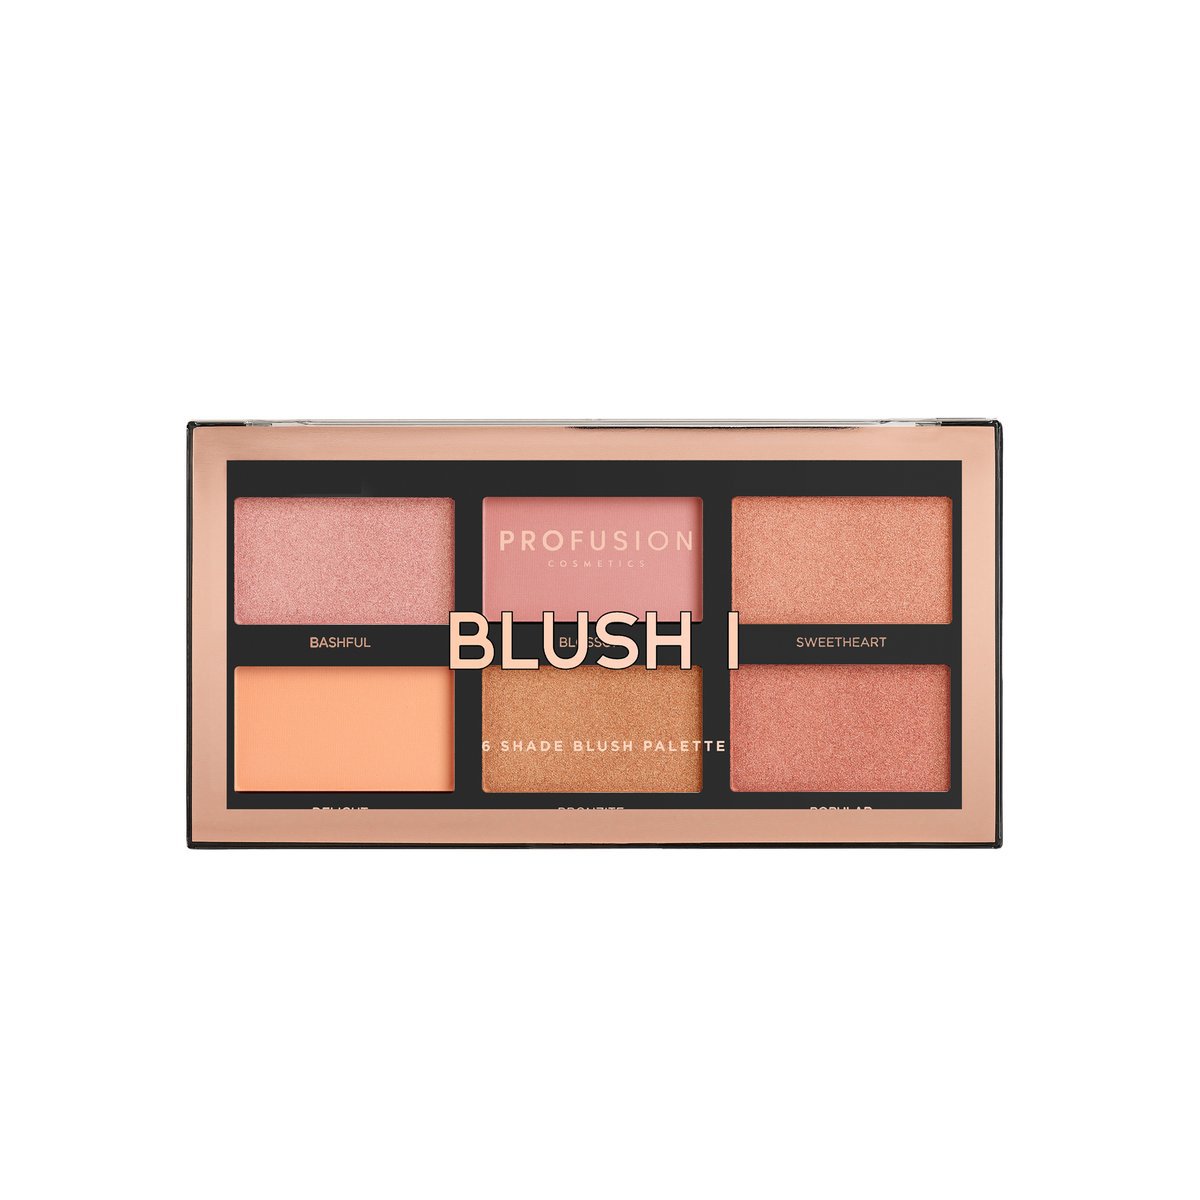 Profusion Blush I 6 shade Blush Palette (EC500-00)